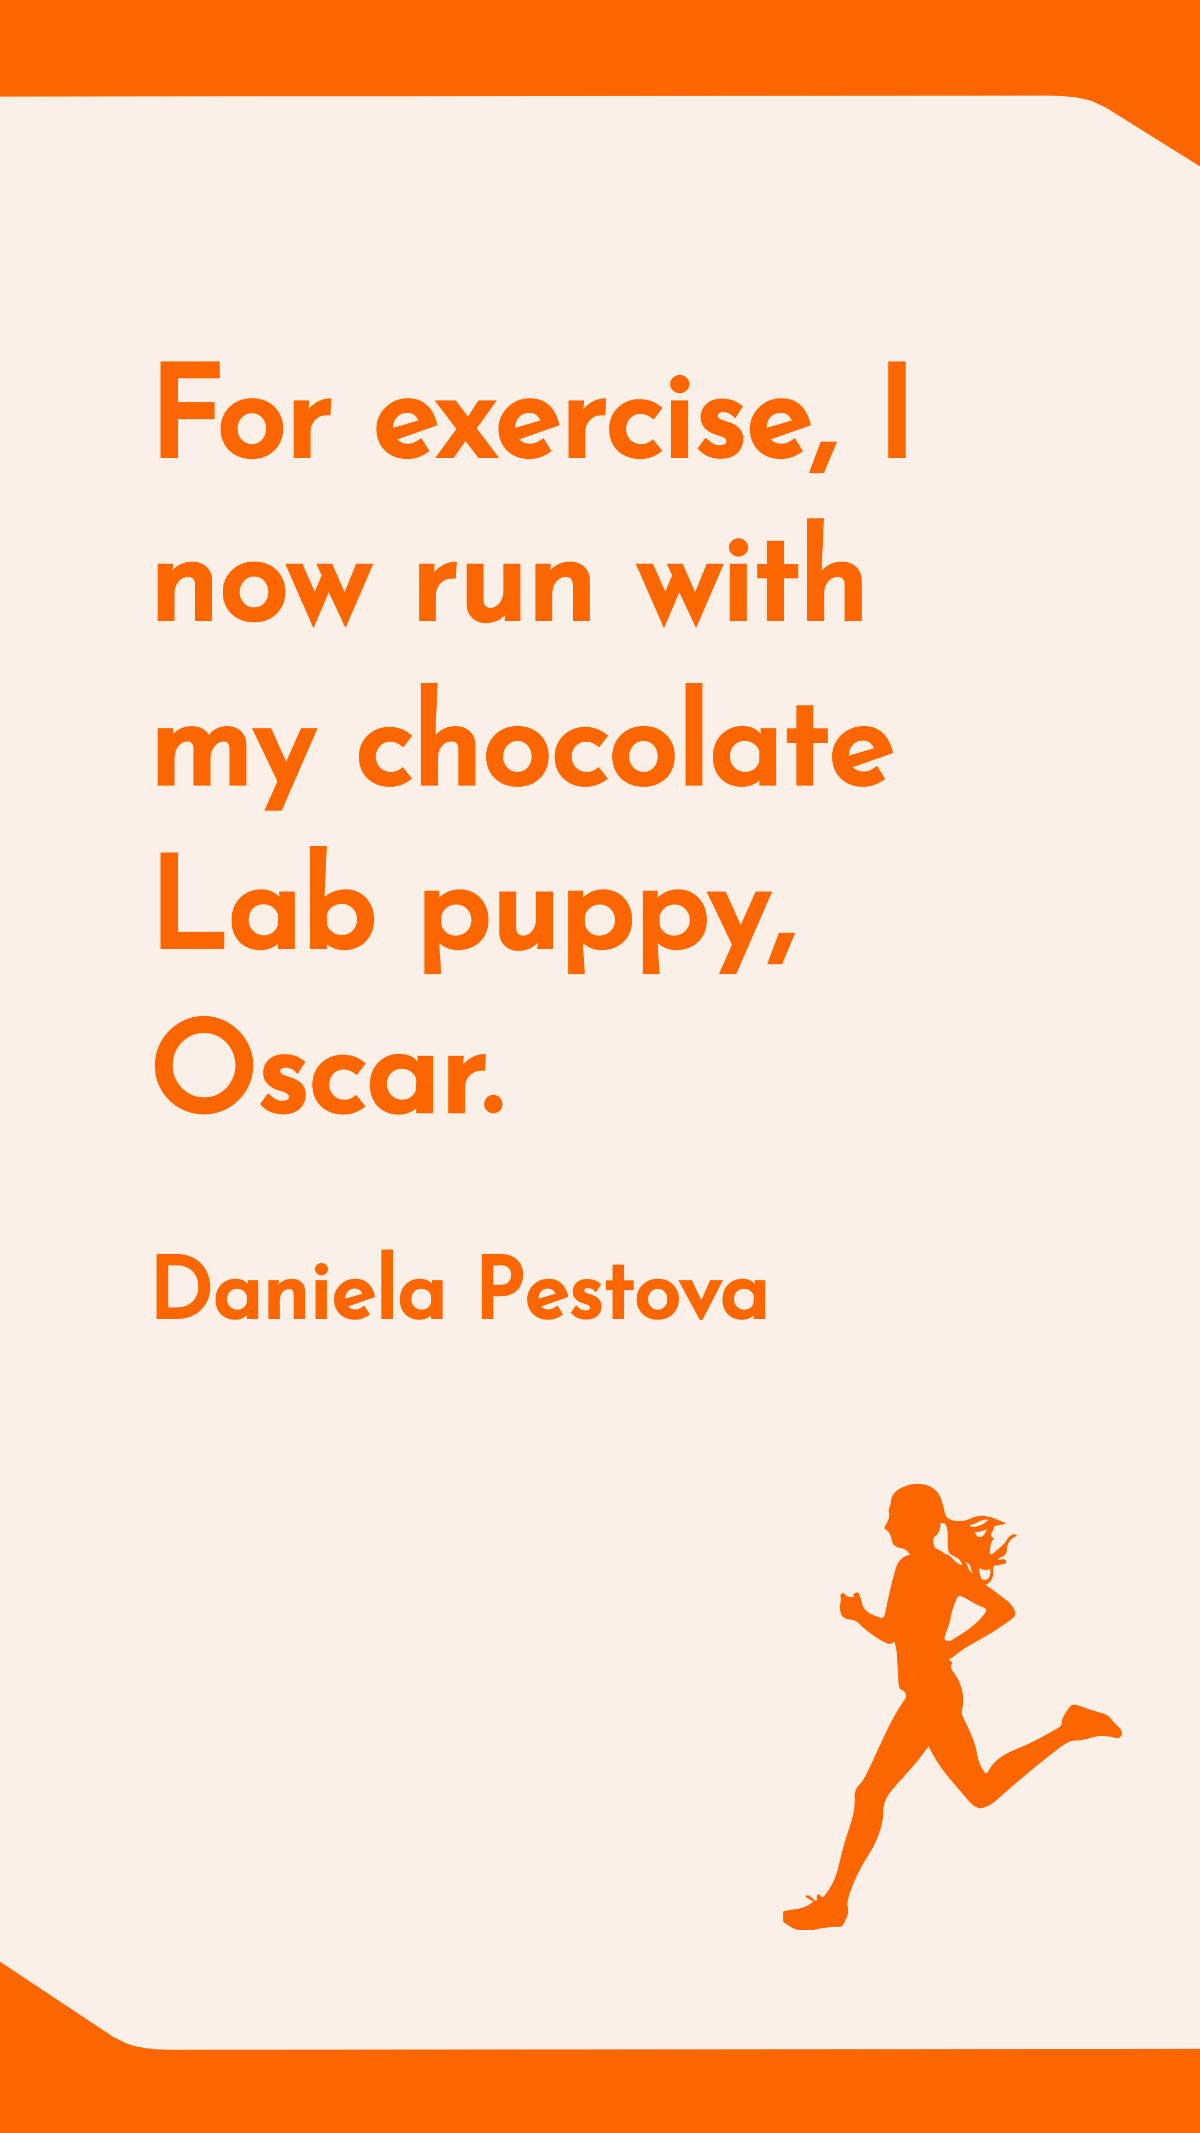 Daniela Pestova - For exercise, I now run with my chocolate Lab puppy, Oscar.